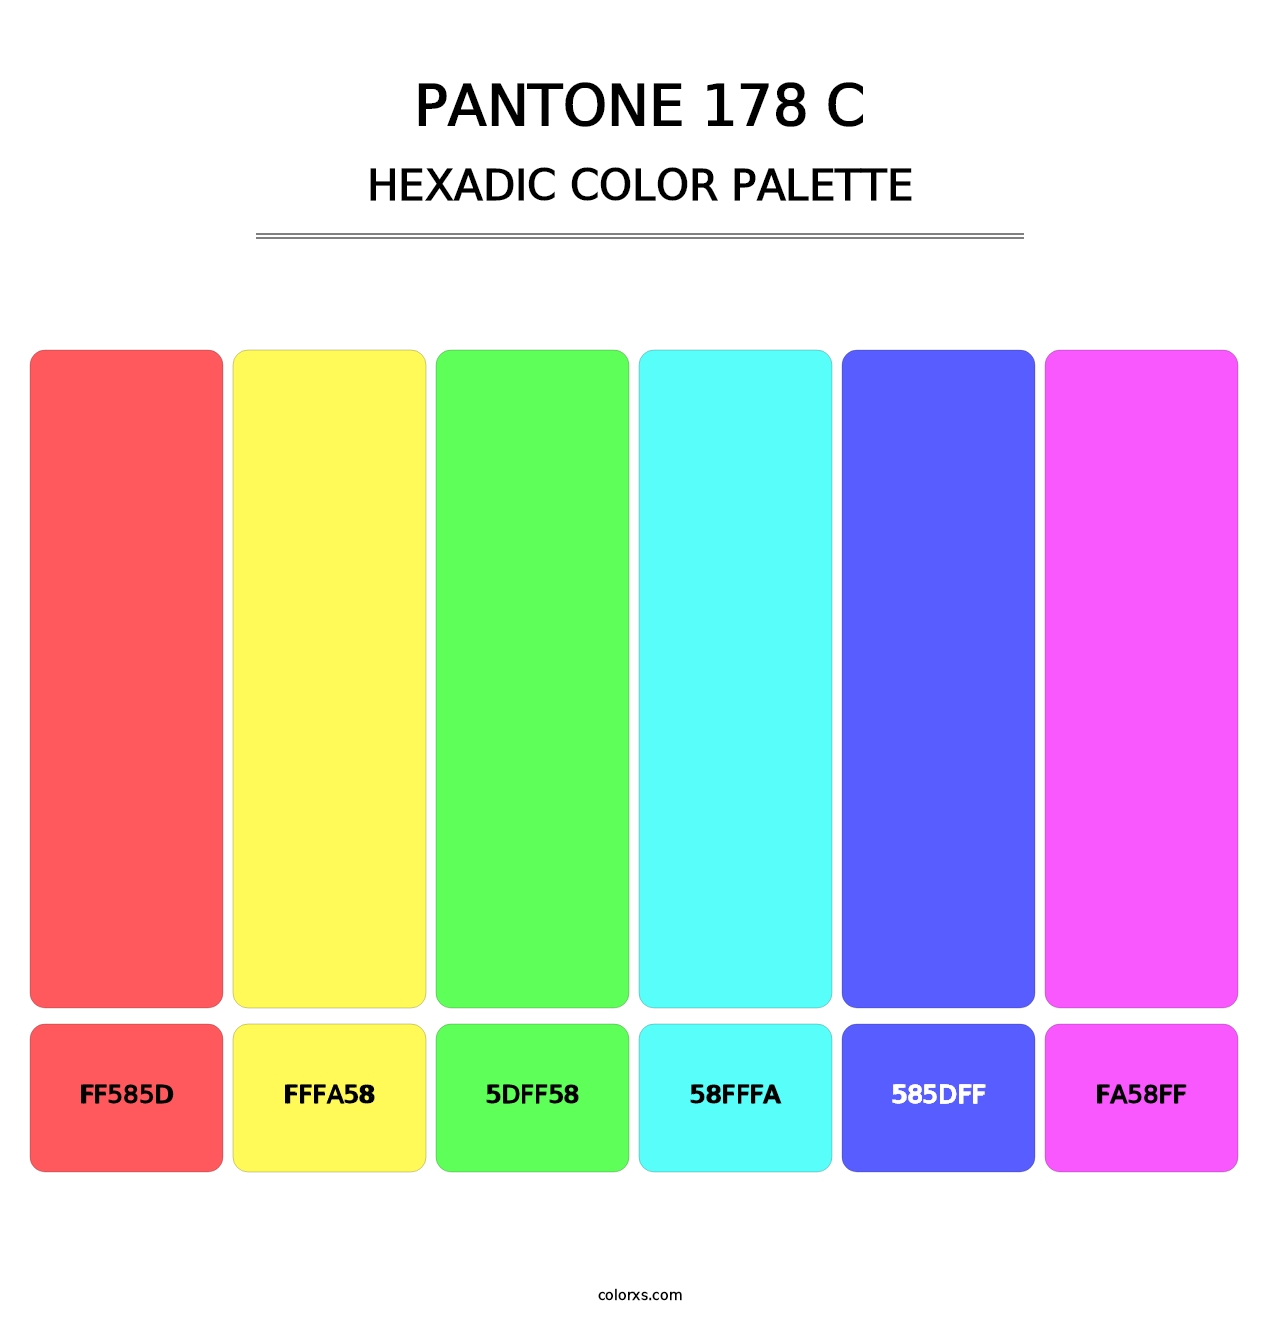 PANTONE 178 C - Hexadic Color Palette